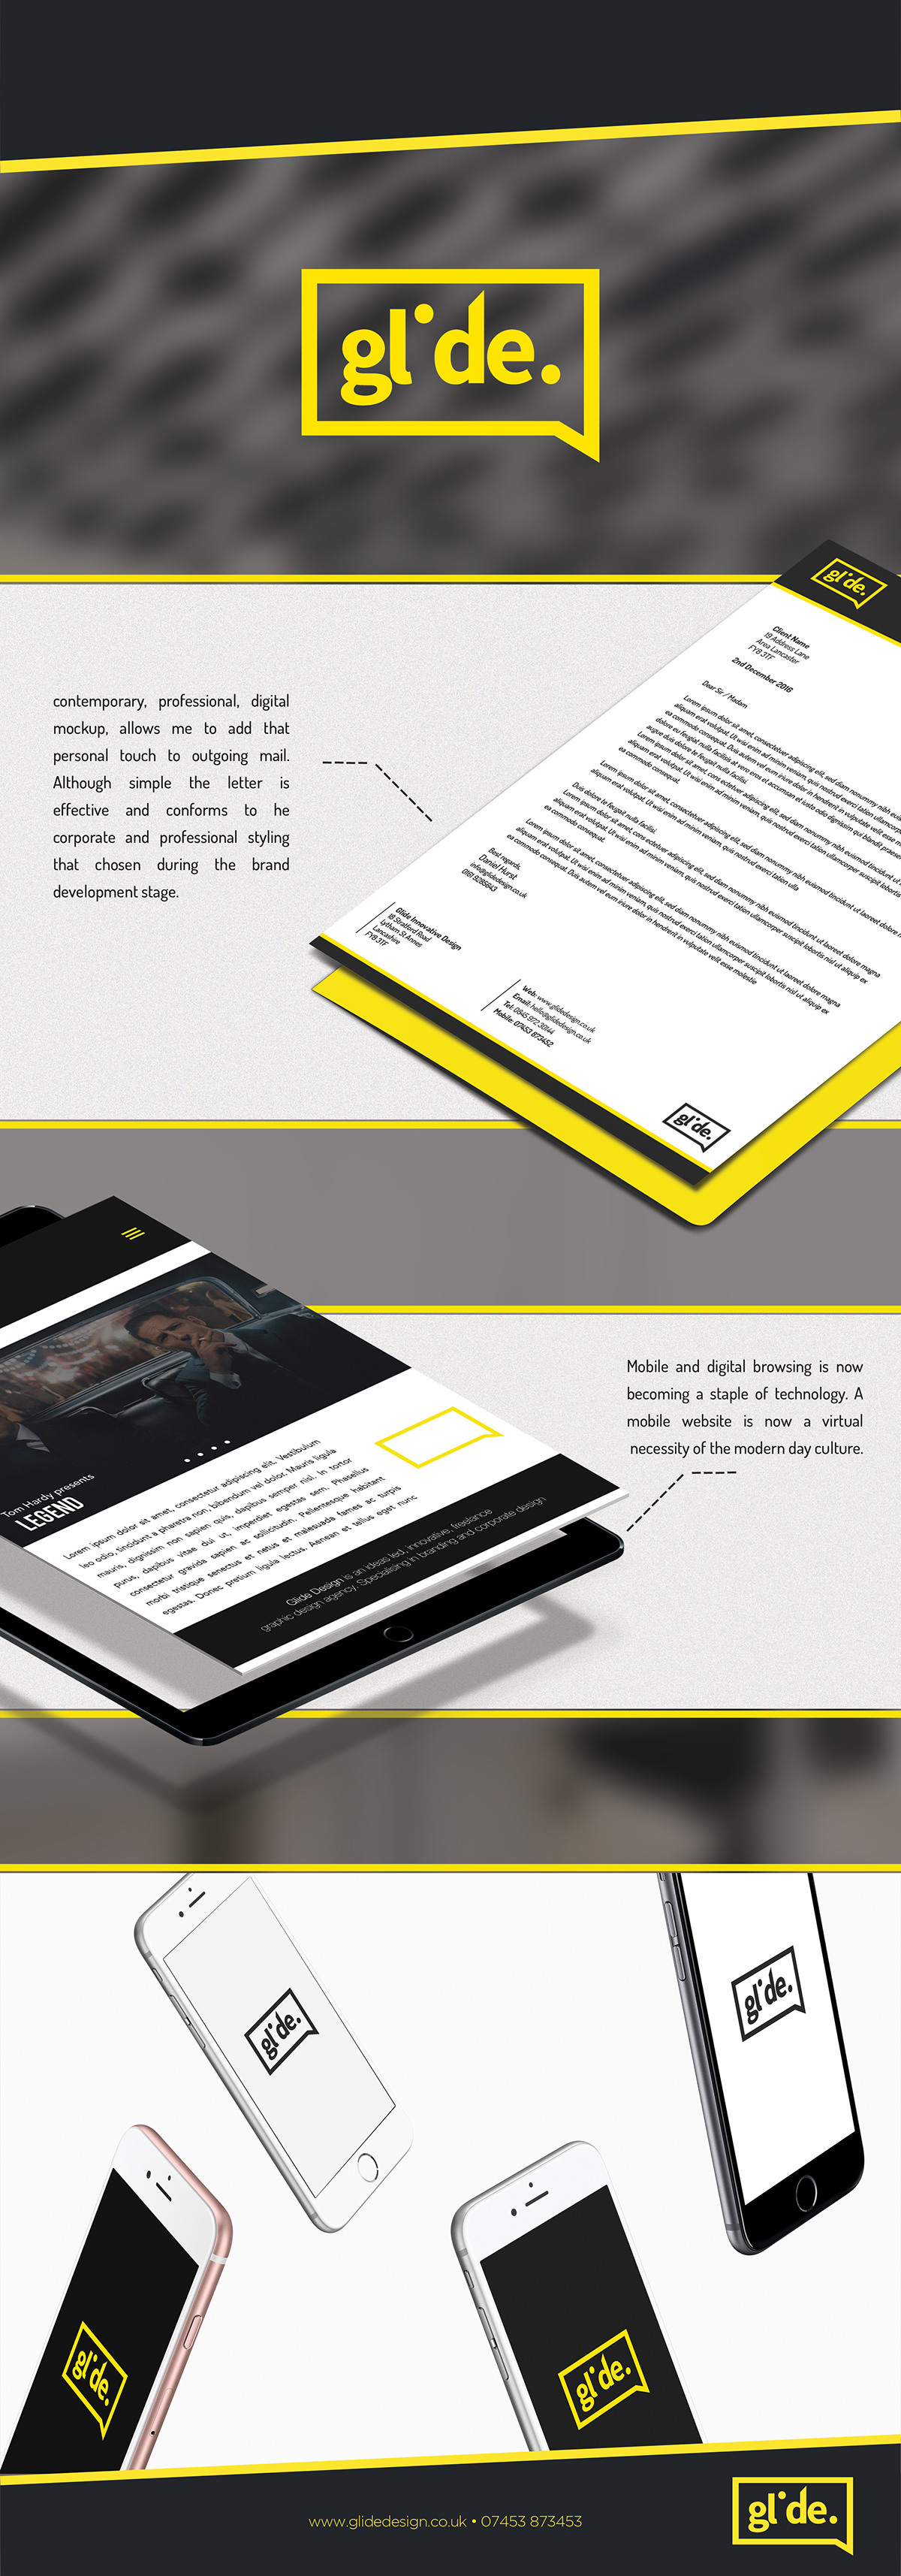 design glide yellow branding  marketing  